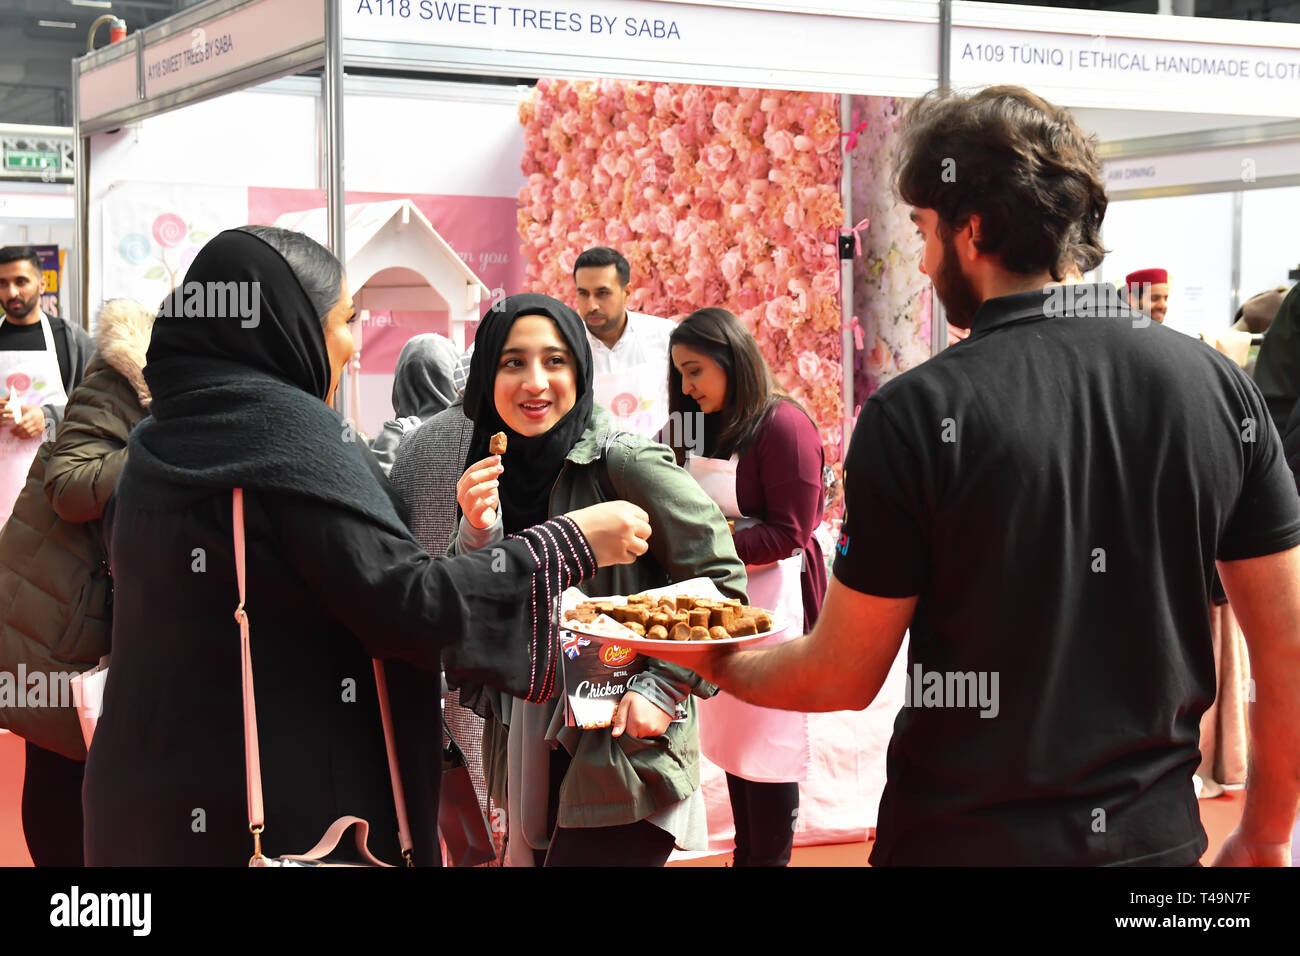 Olympia, London, UK. 14. Apr 2019. Moden und halal Essensstände Ausstellung in London muslimische Shopping Festival 2019 am 14. April 2019 in Olympia London, UK. Bild Capital/Alamy leben Nachrichten Stockfoto